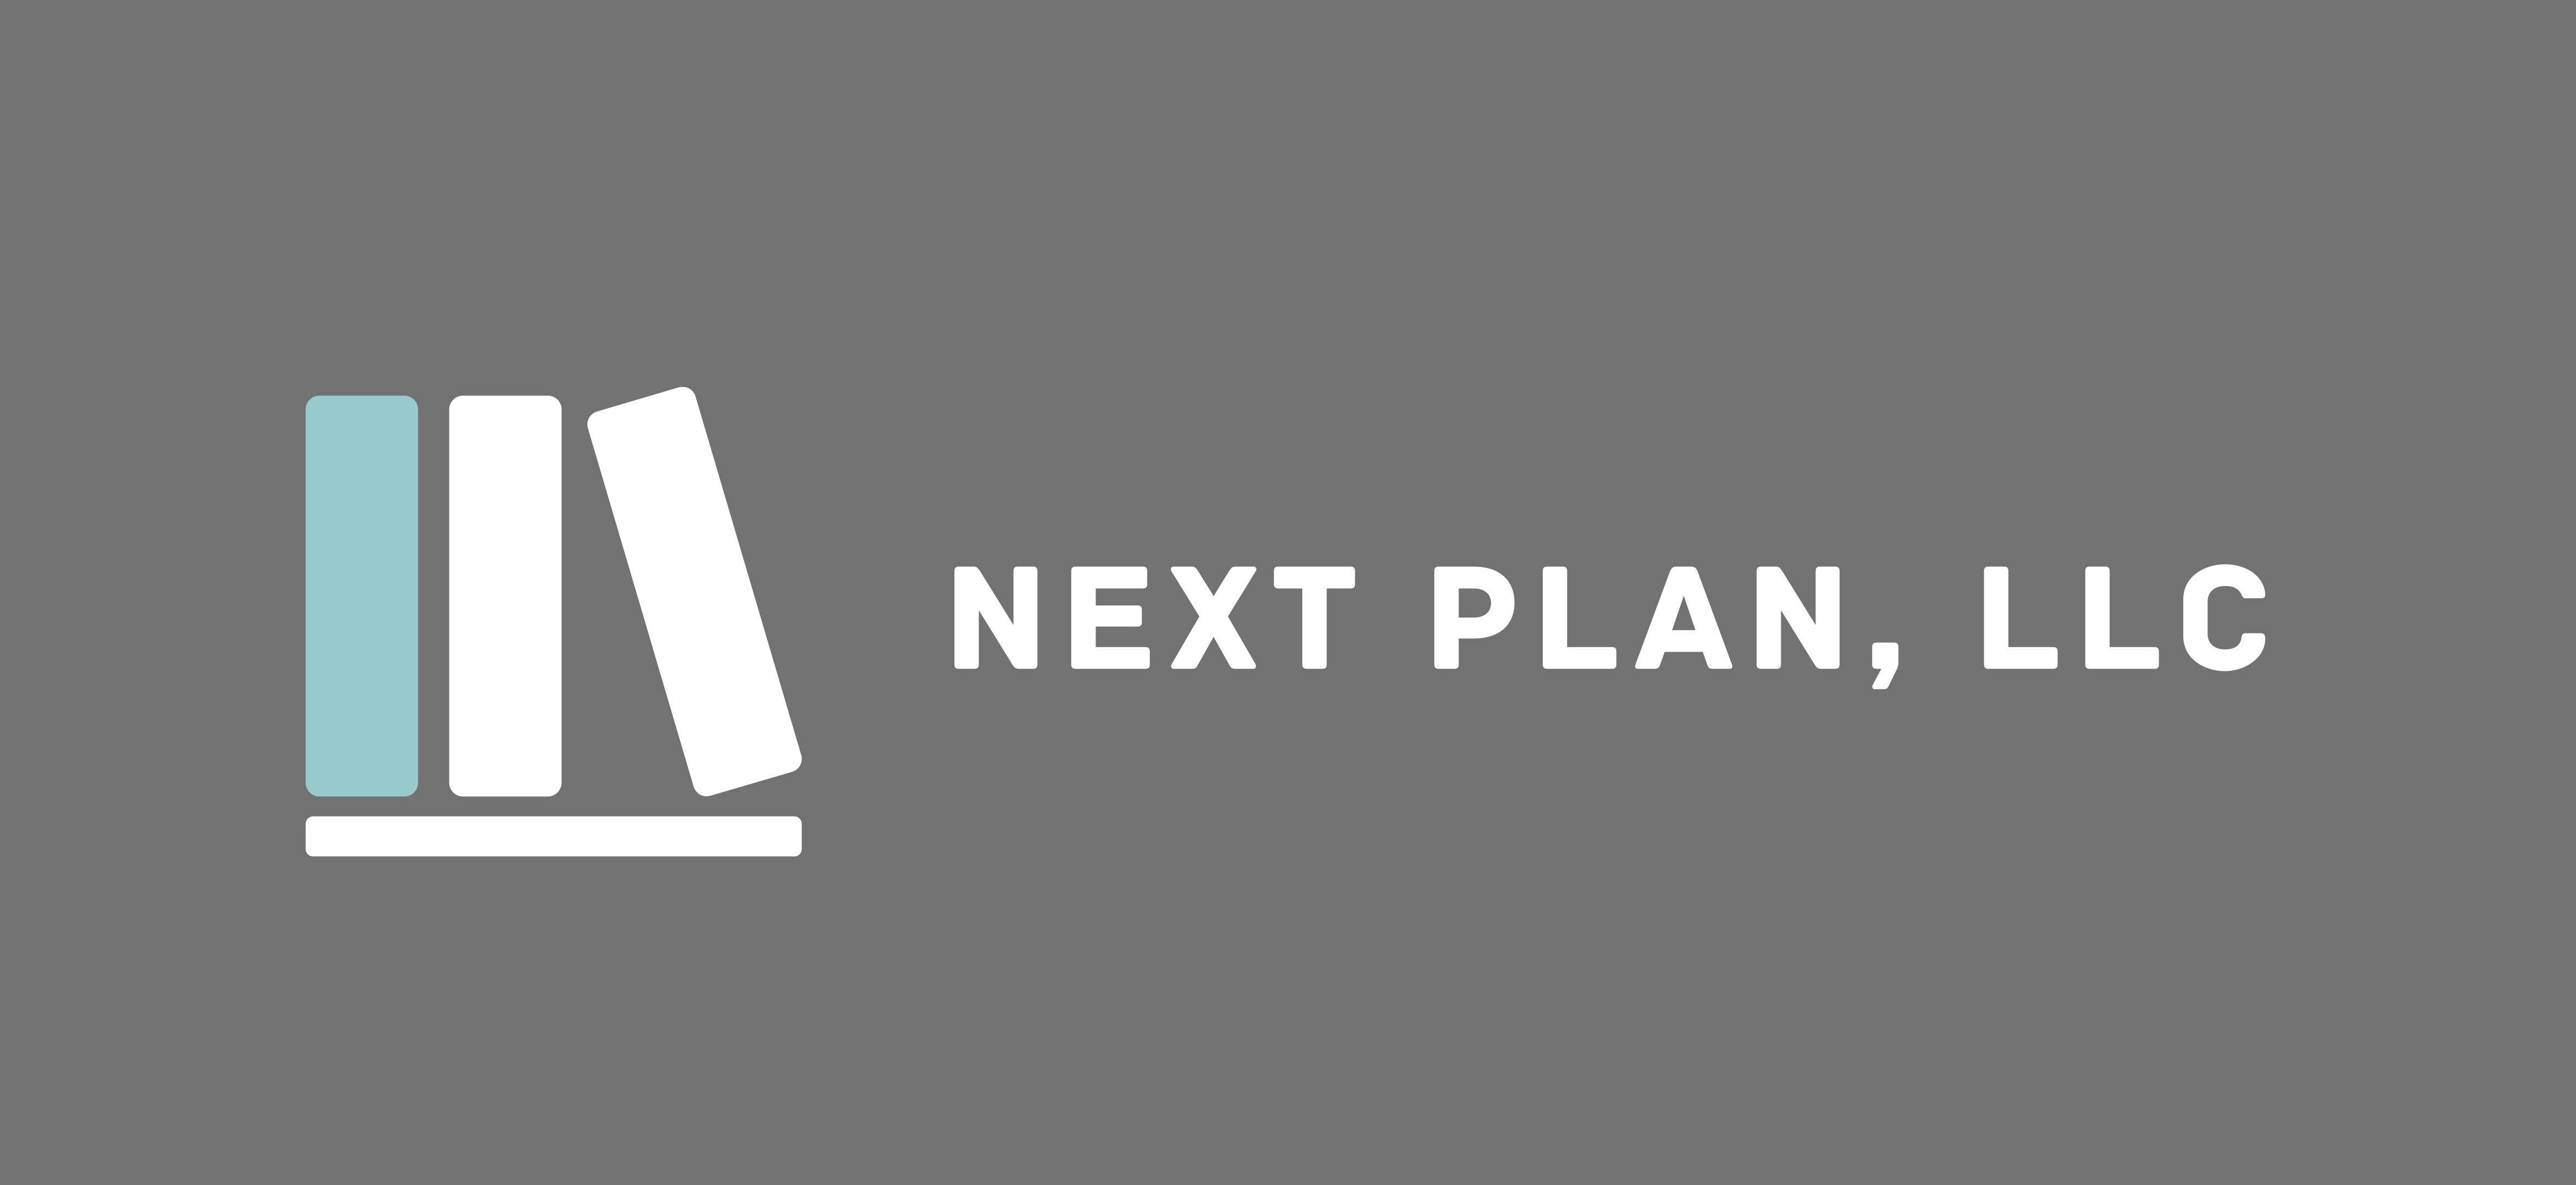 Next Plan, LLC